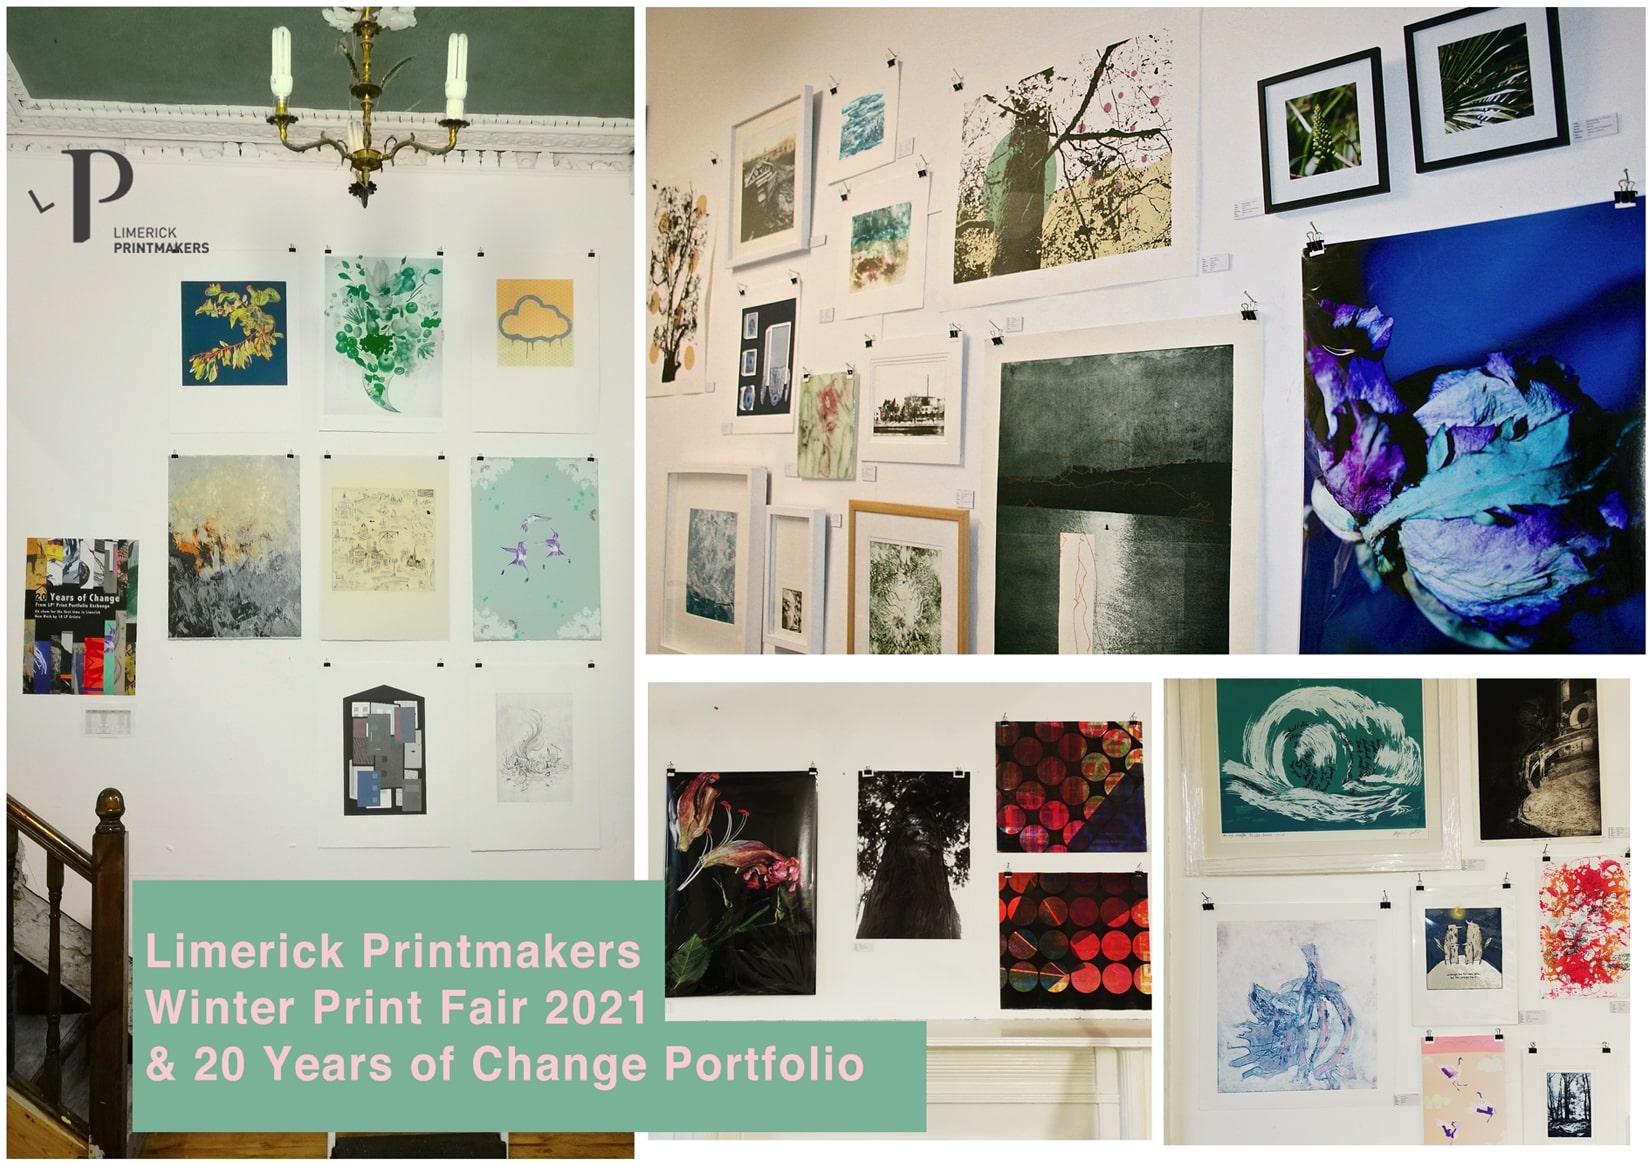 Limerick Printmakers Winter Print Fair 2021 - Presenting '20 Years of Change' Portfolio continues until Christmas Week.